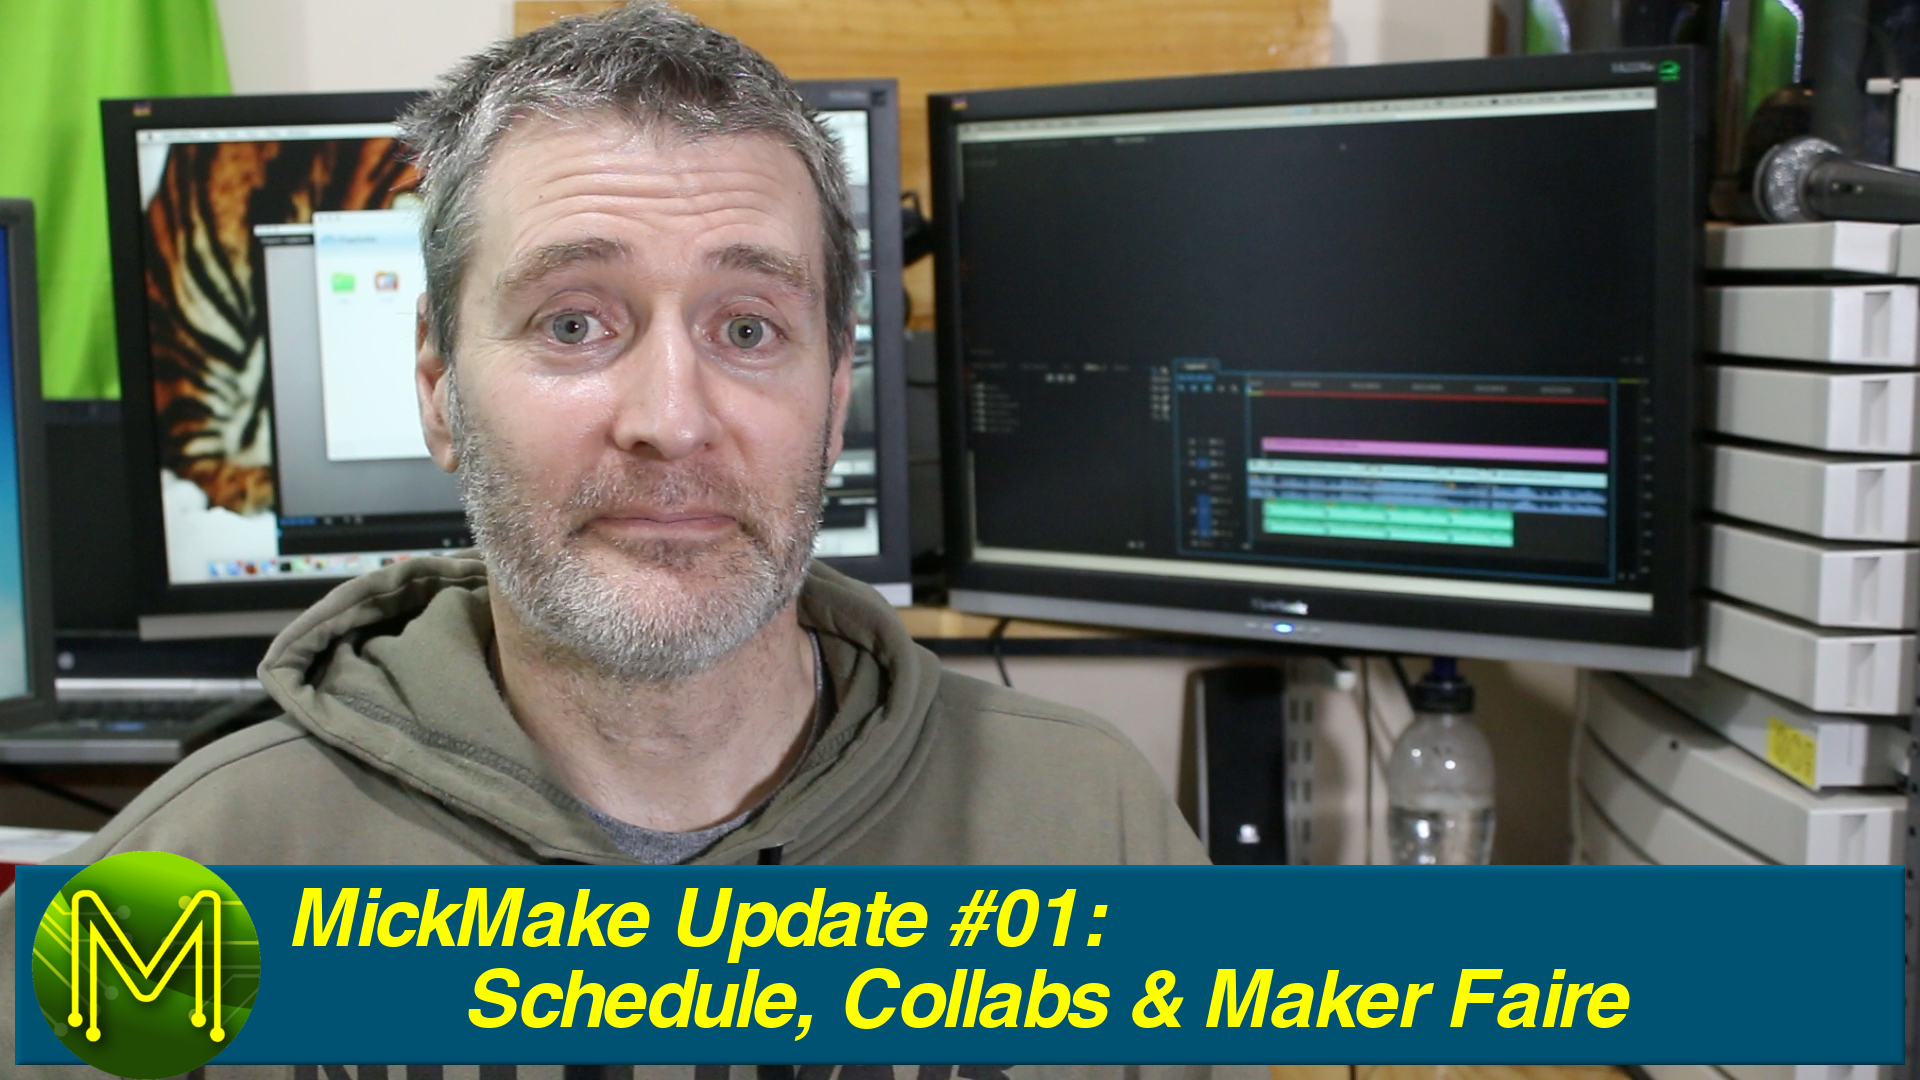 MickMake Update #01: Schedule, Collabs & Maker Faire